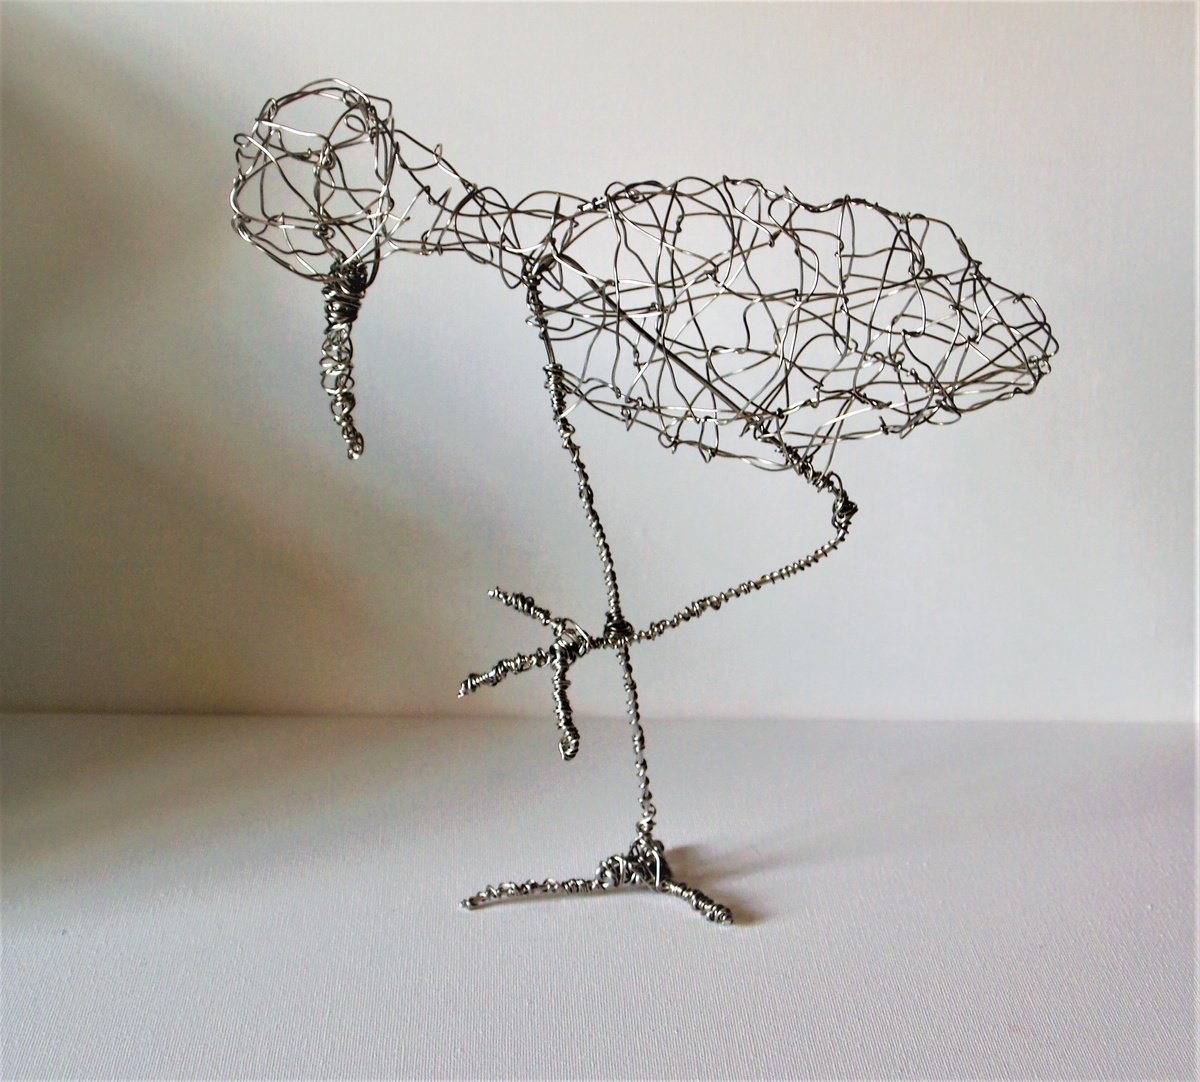 Silver wire Steve Stork by Steph Morgan